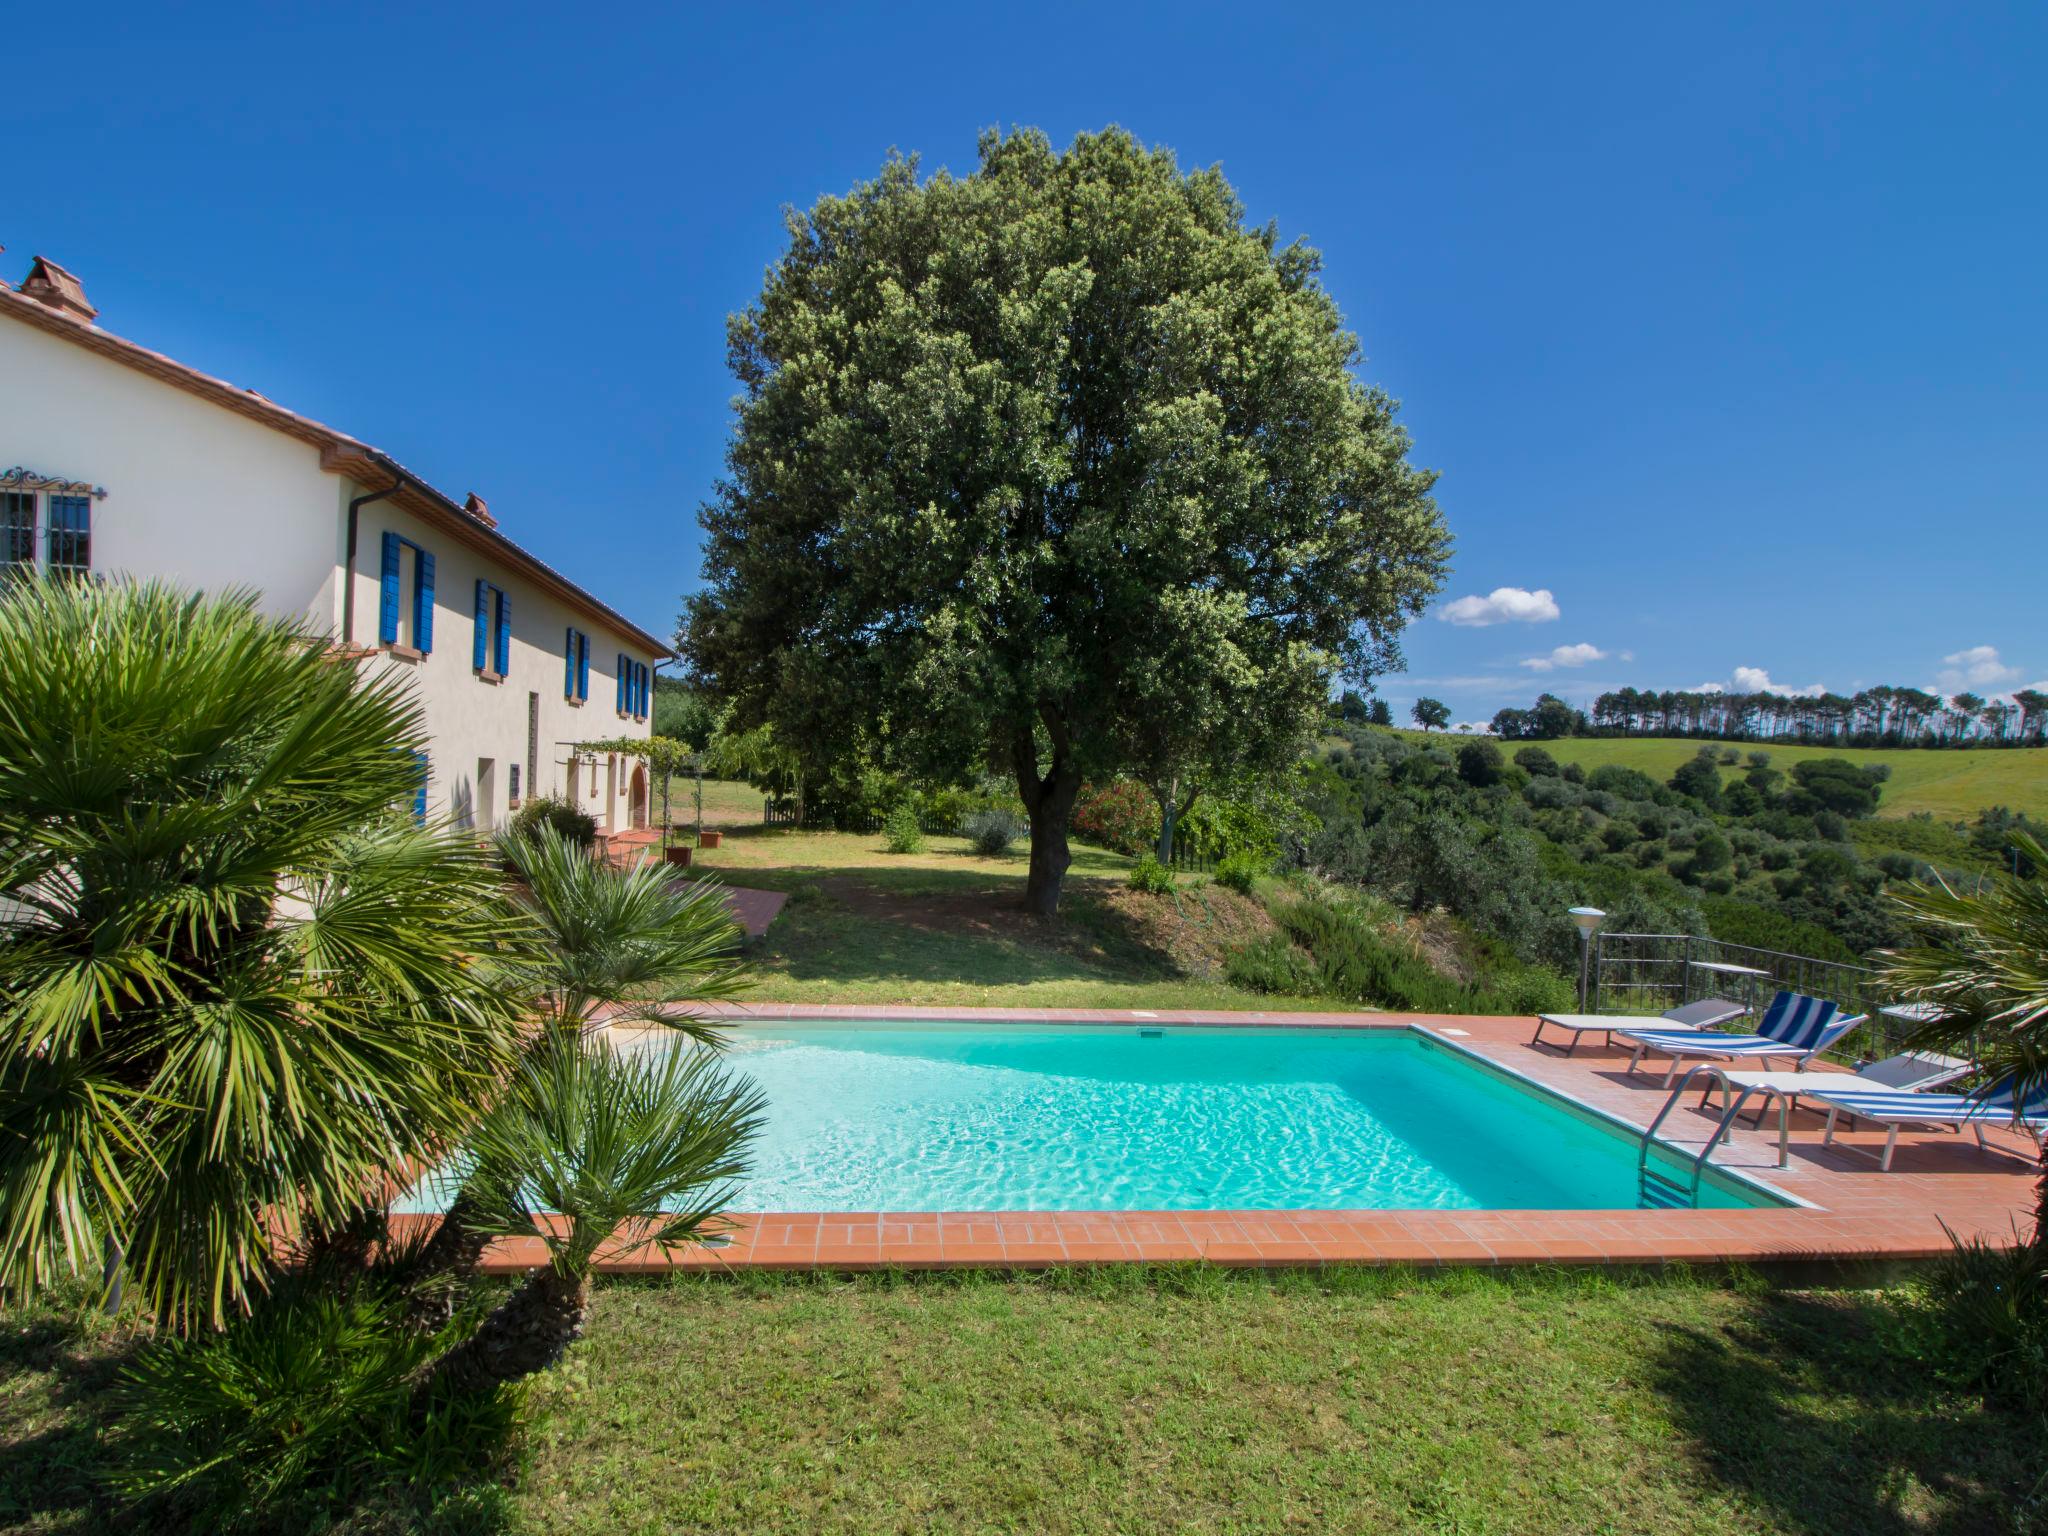 Foto 2 - Haus mit 4 Schlafzimmern in Riparbella mit privater pool